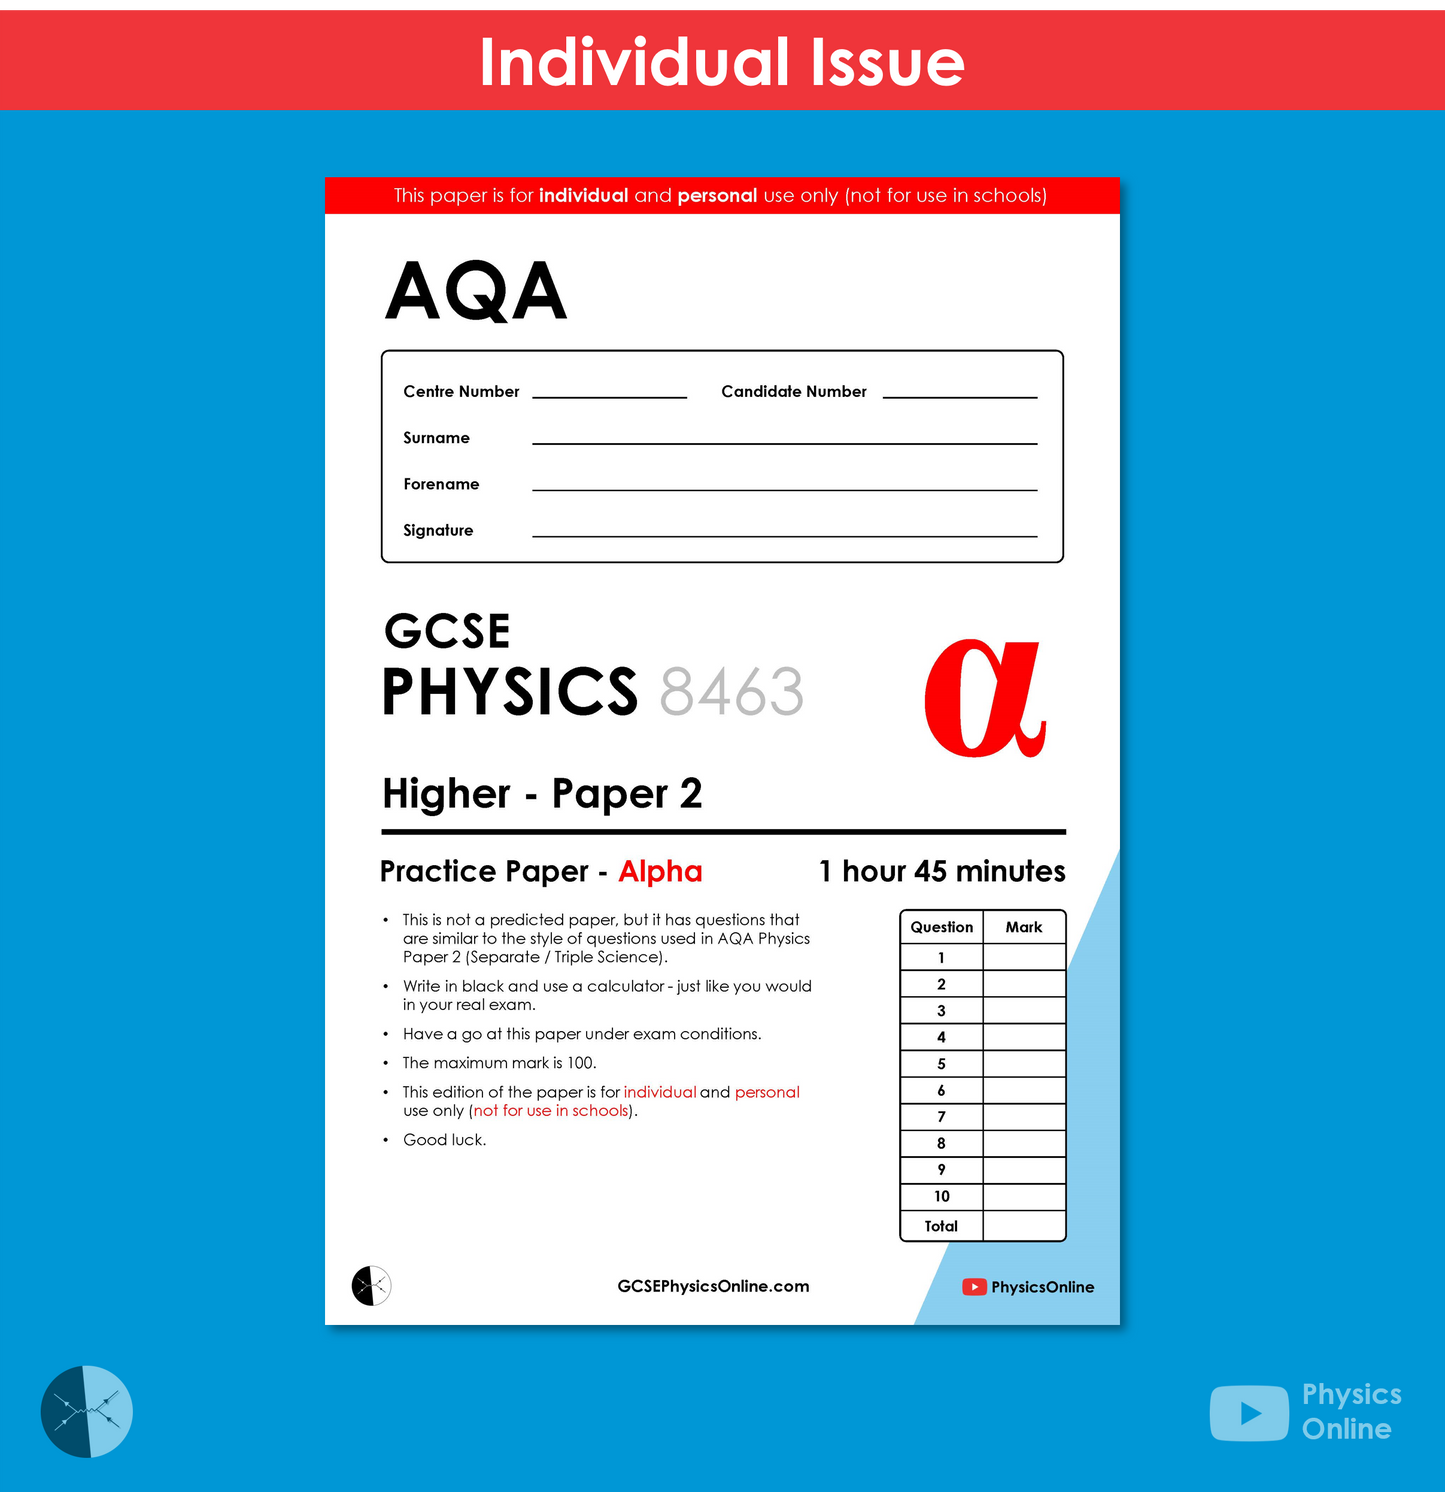 AQA Practice Paper | Paper 2 - Alpha | Individual Issue | GCSE Physics